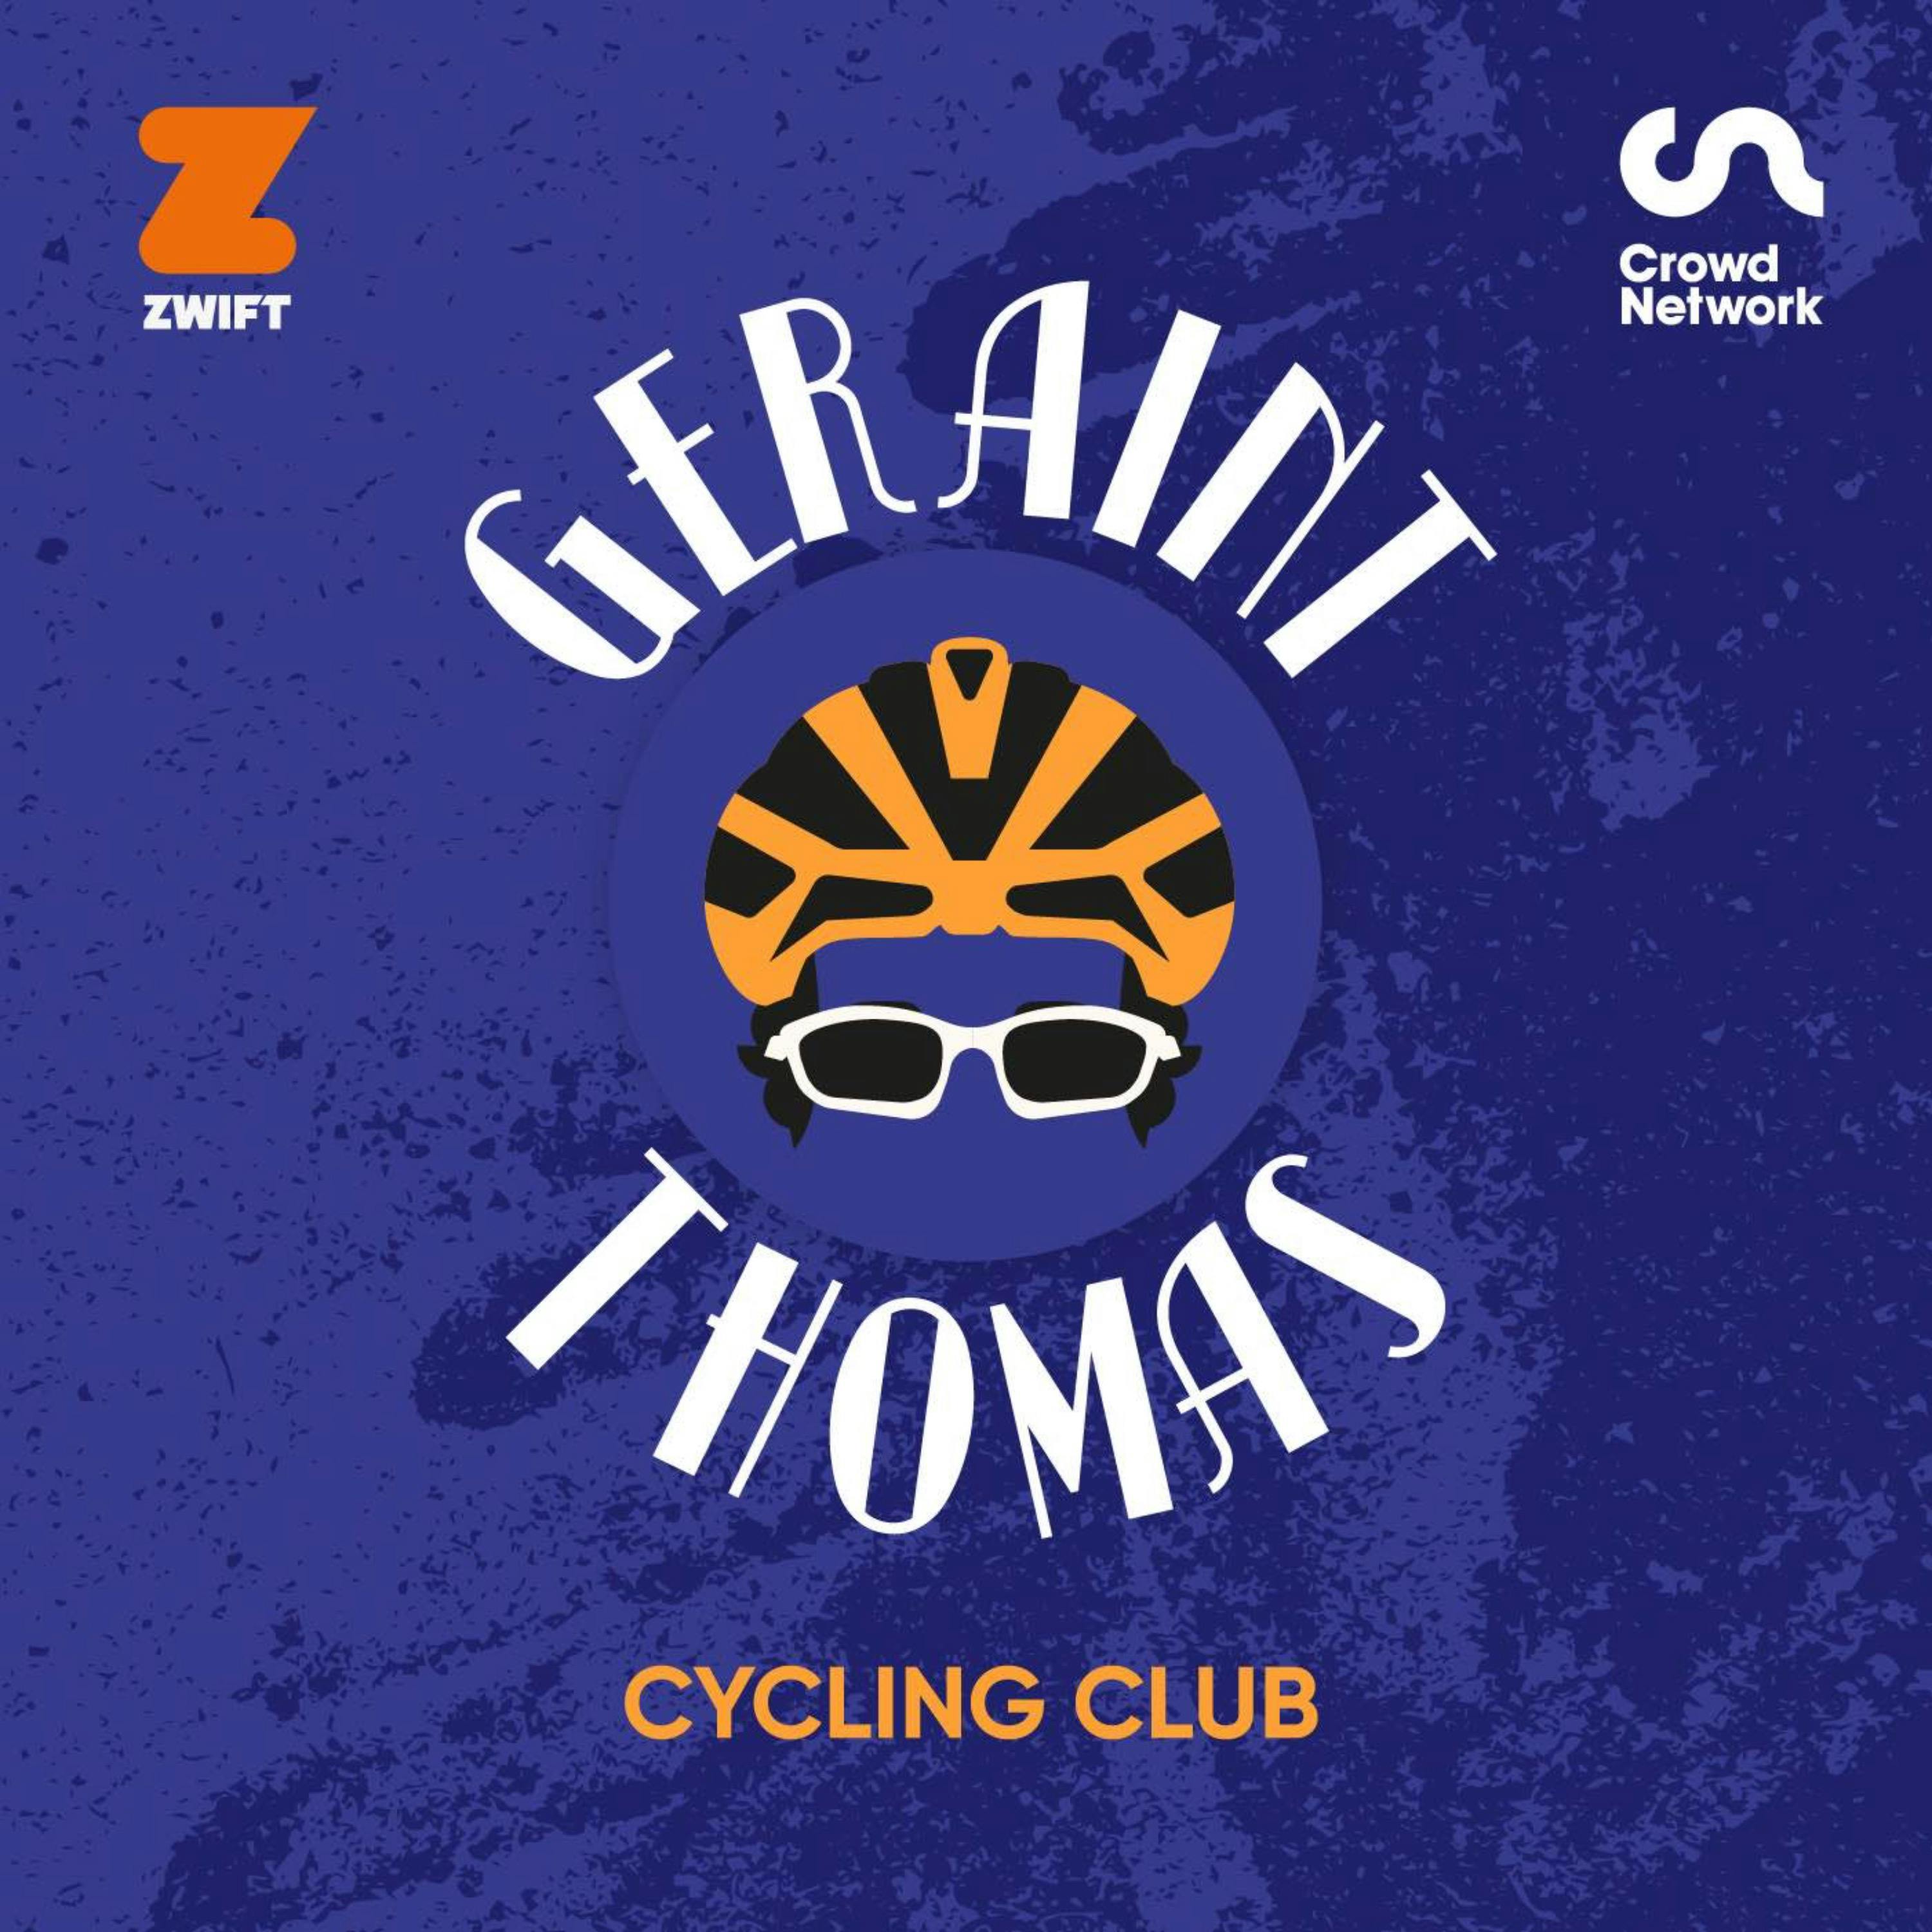 The Geraint Thomas Cycling Club:Crowd Network